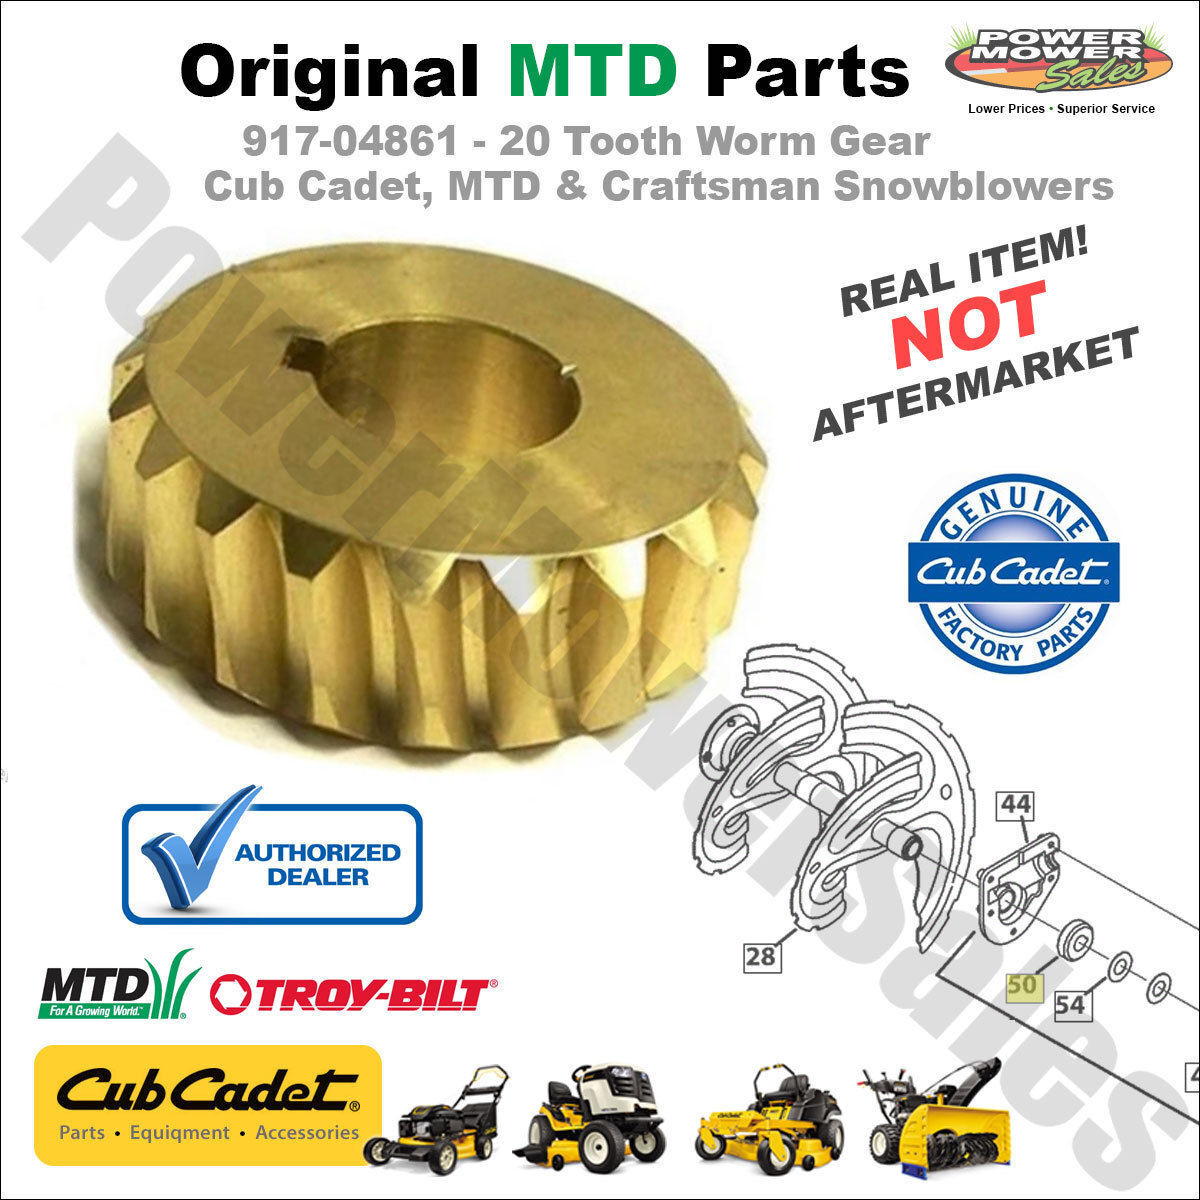 917-04861 - 20 Tooth Worm Gear for Cub Cadet & Craftsman 40\